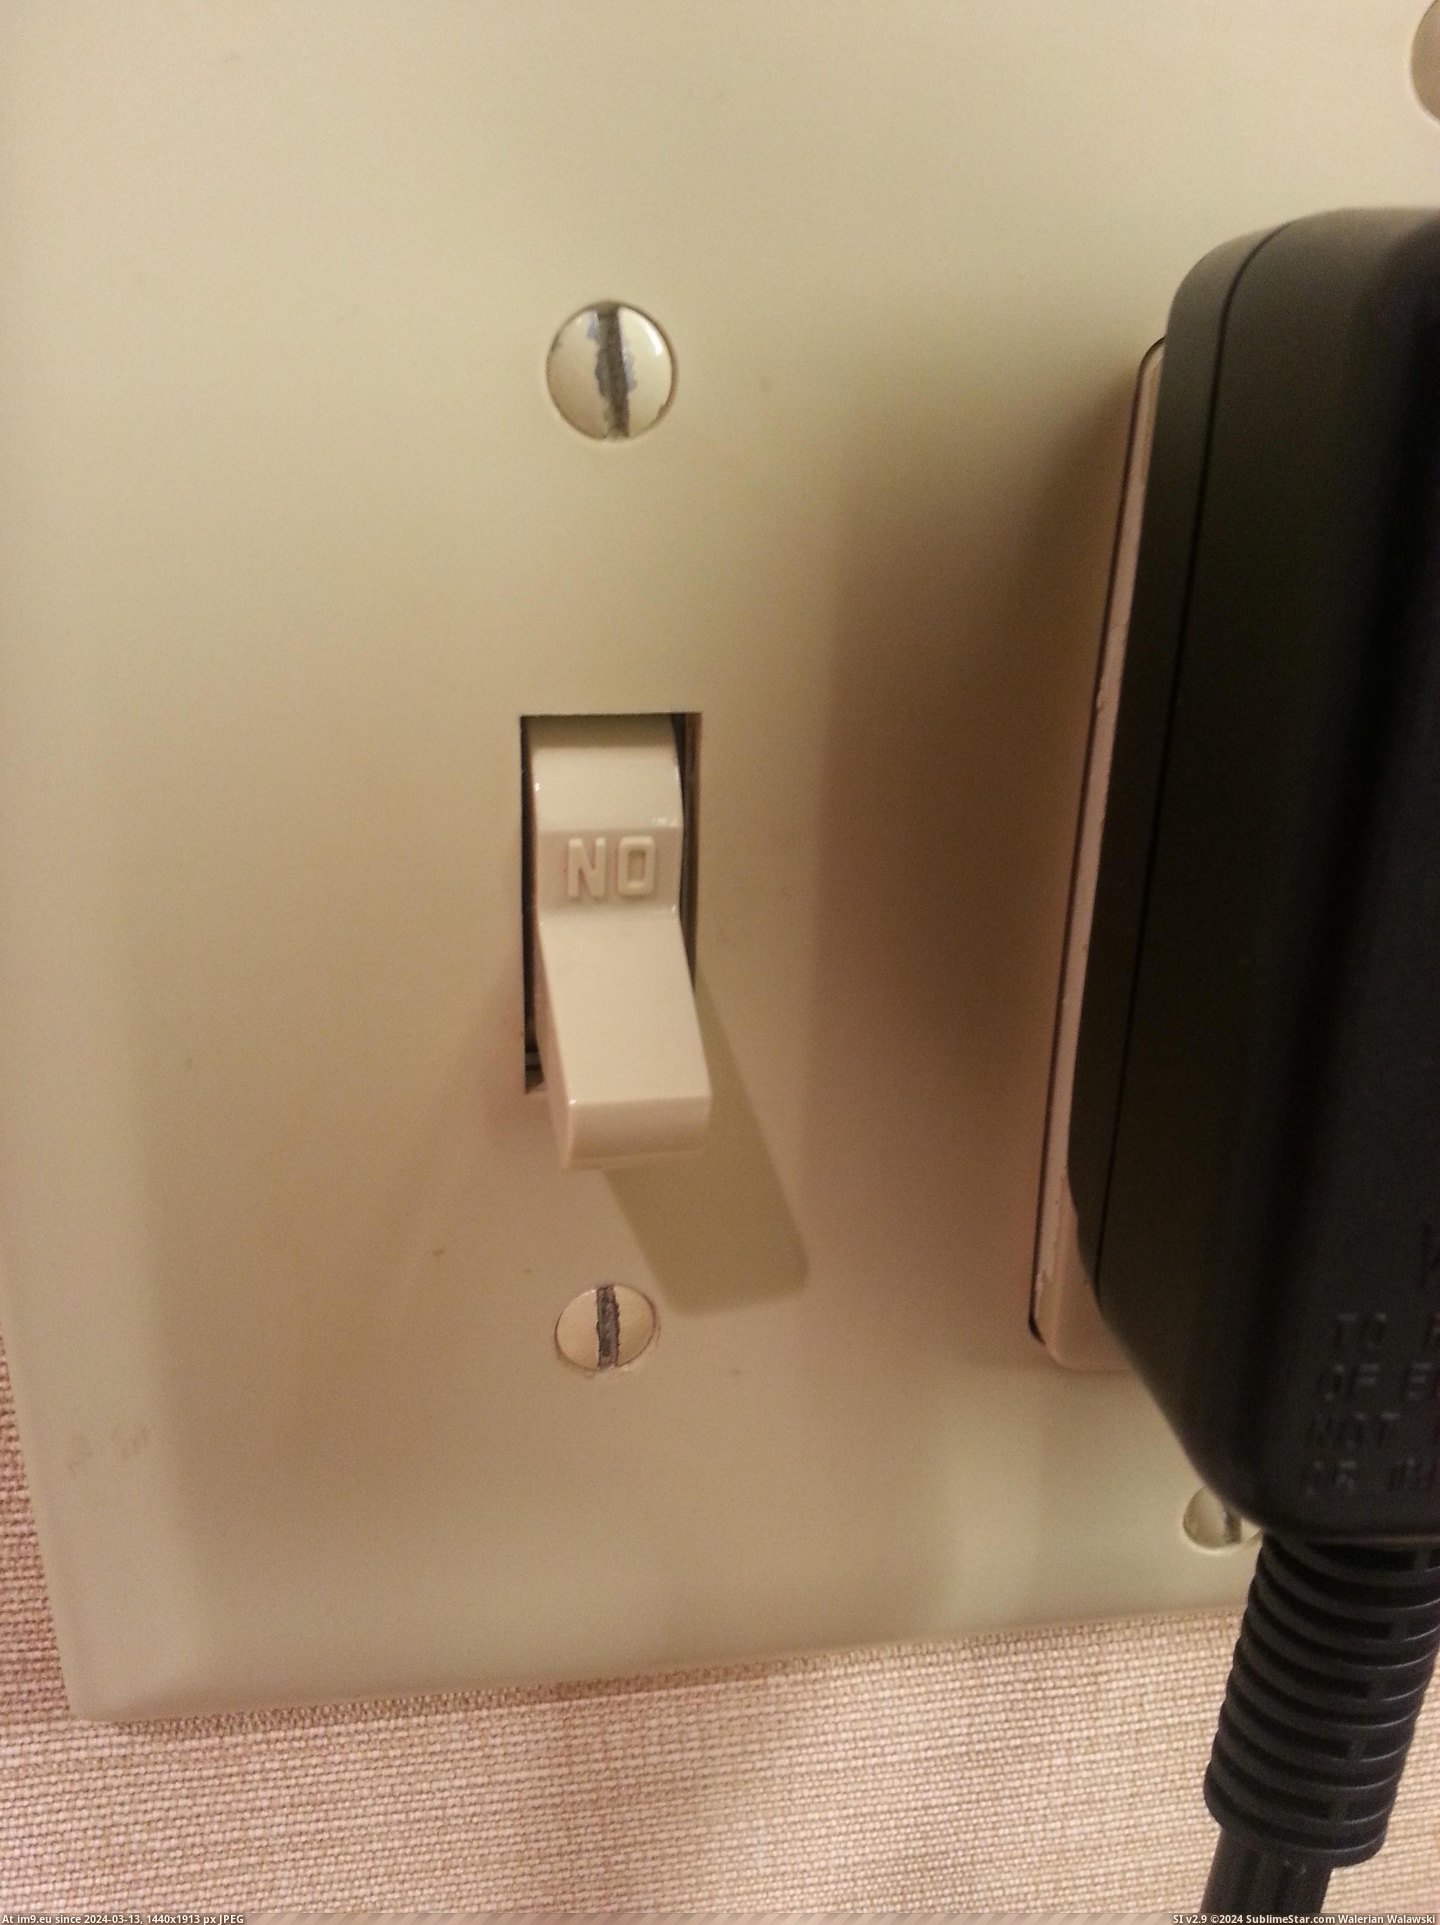 #Hotel #Switch #Upside #Light [Mildlyinteresting] This hotel light switch is upside down. Pic. (Bild von album My r/MILDLYINTERESTING favs))